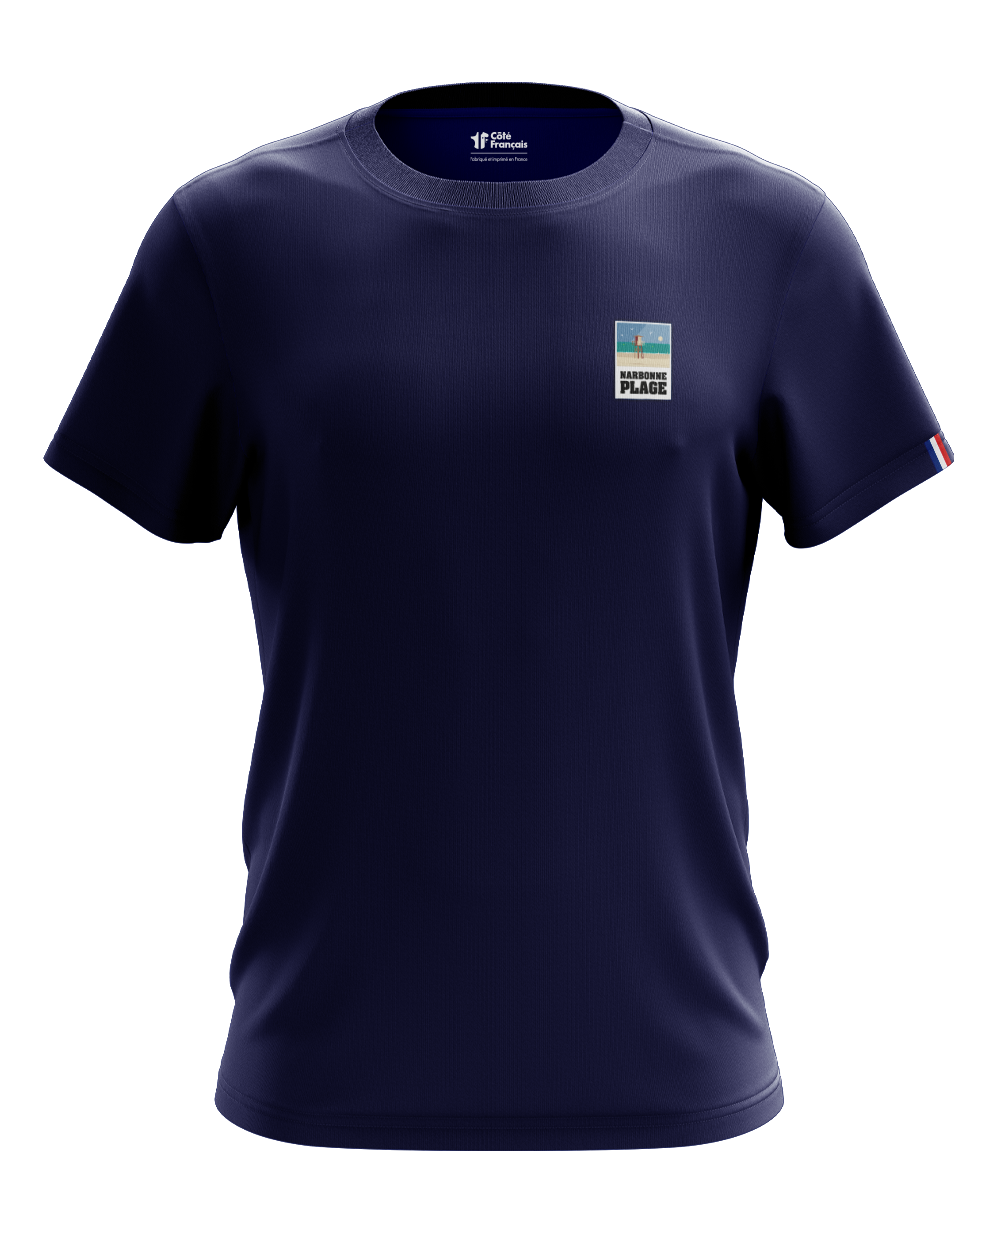 T-Shirt "Narbonne plage" - bleu marine